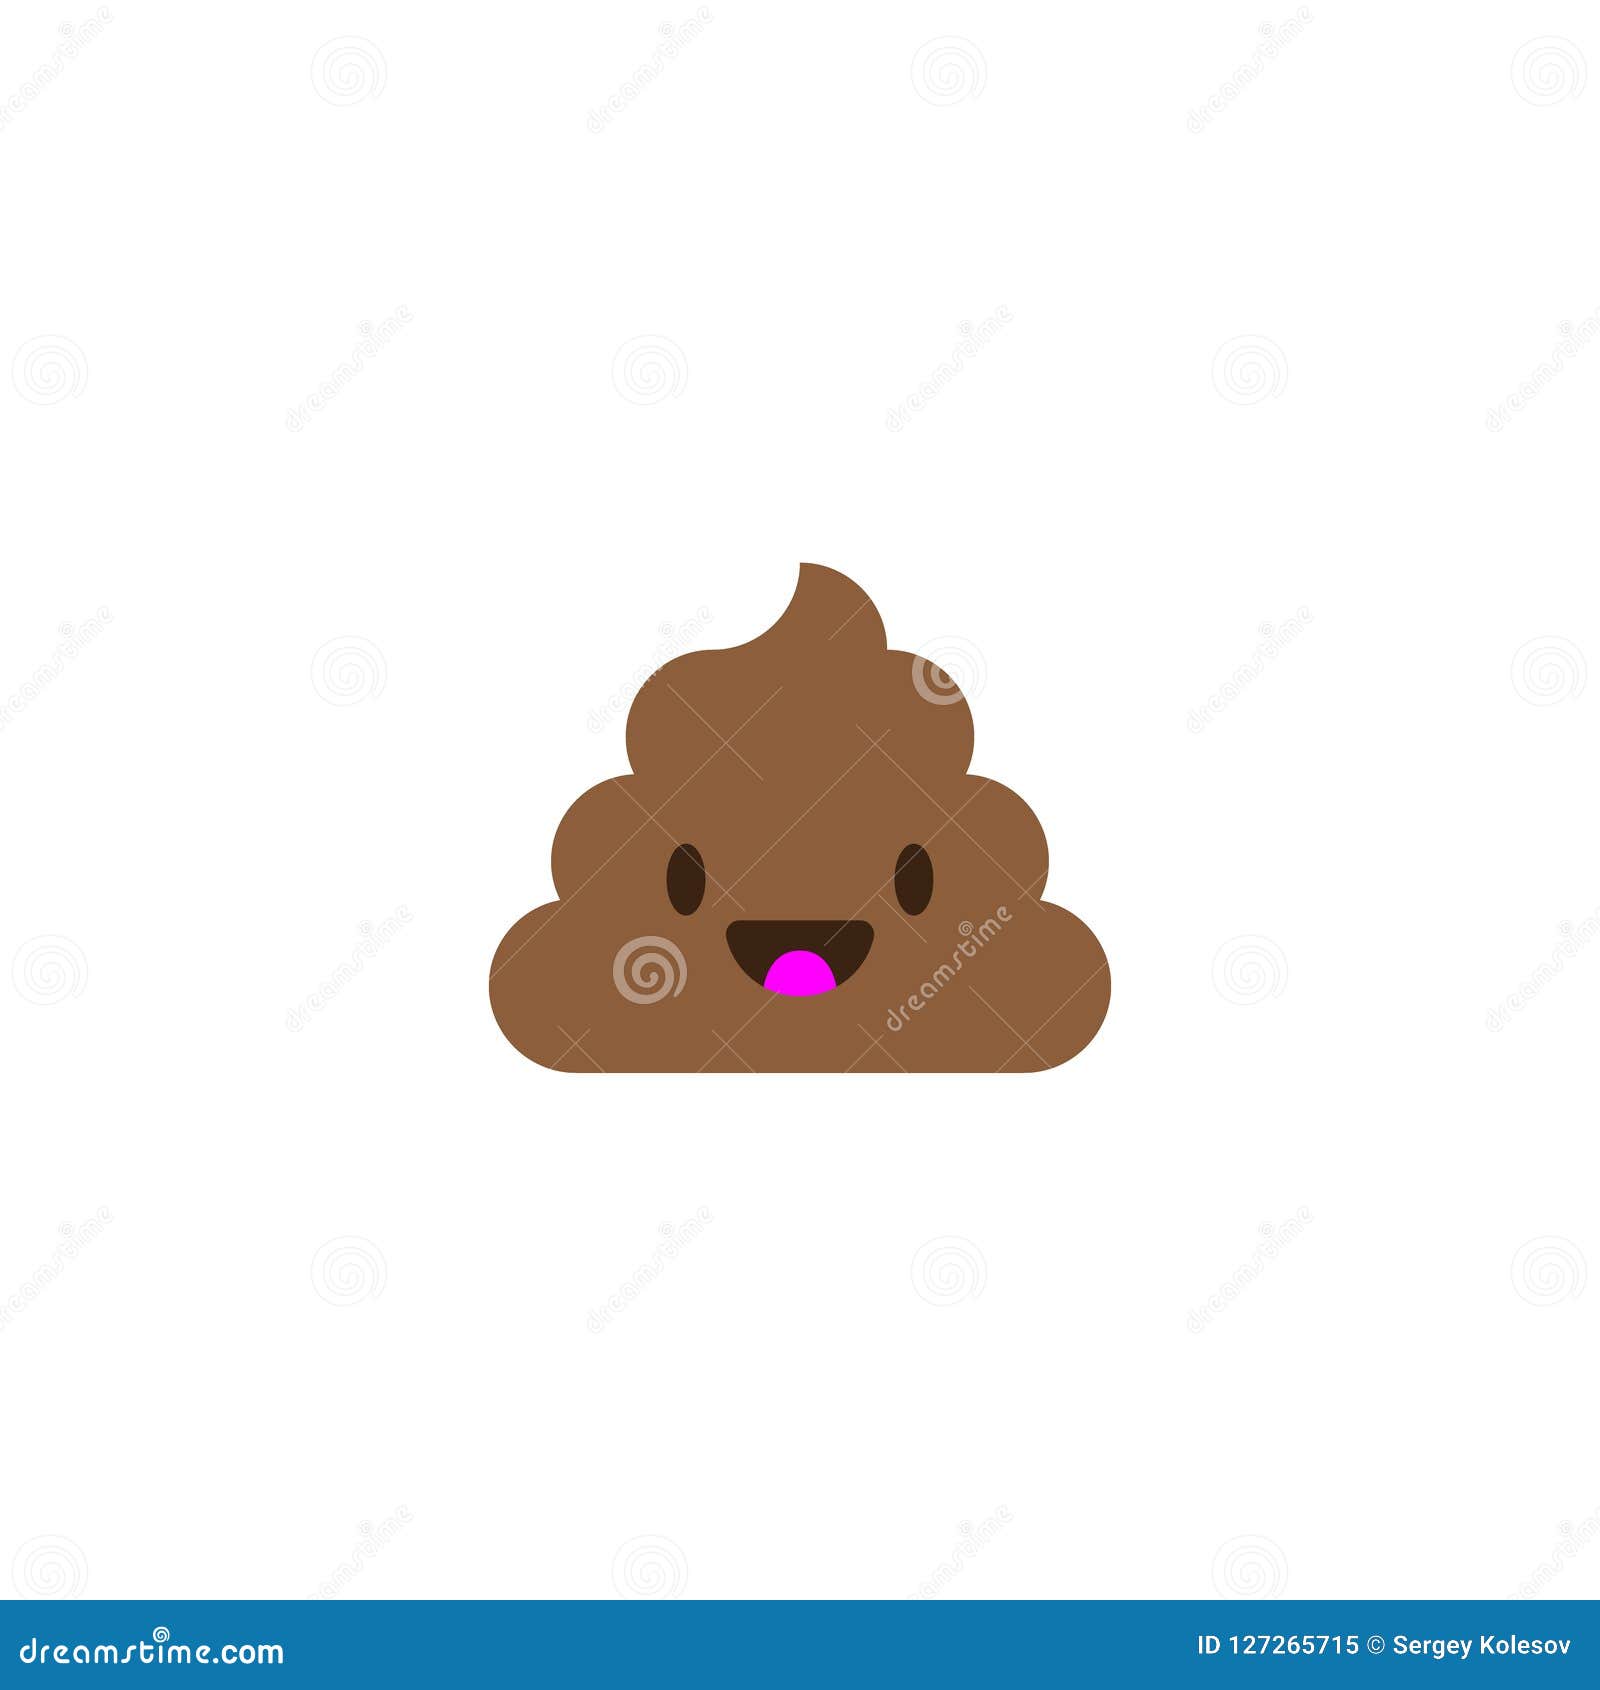 pile of poo icon. shit emoticon